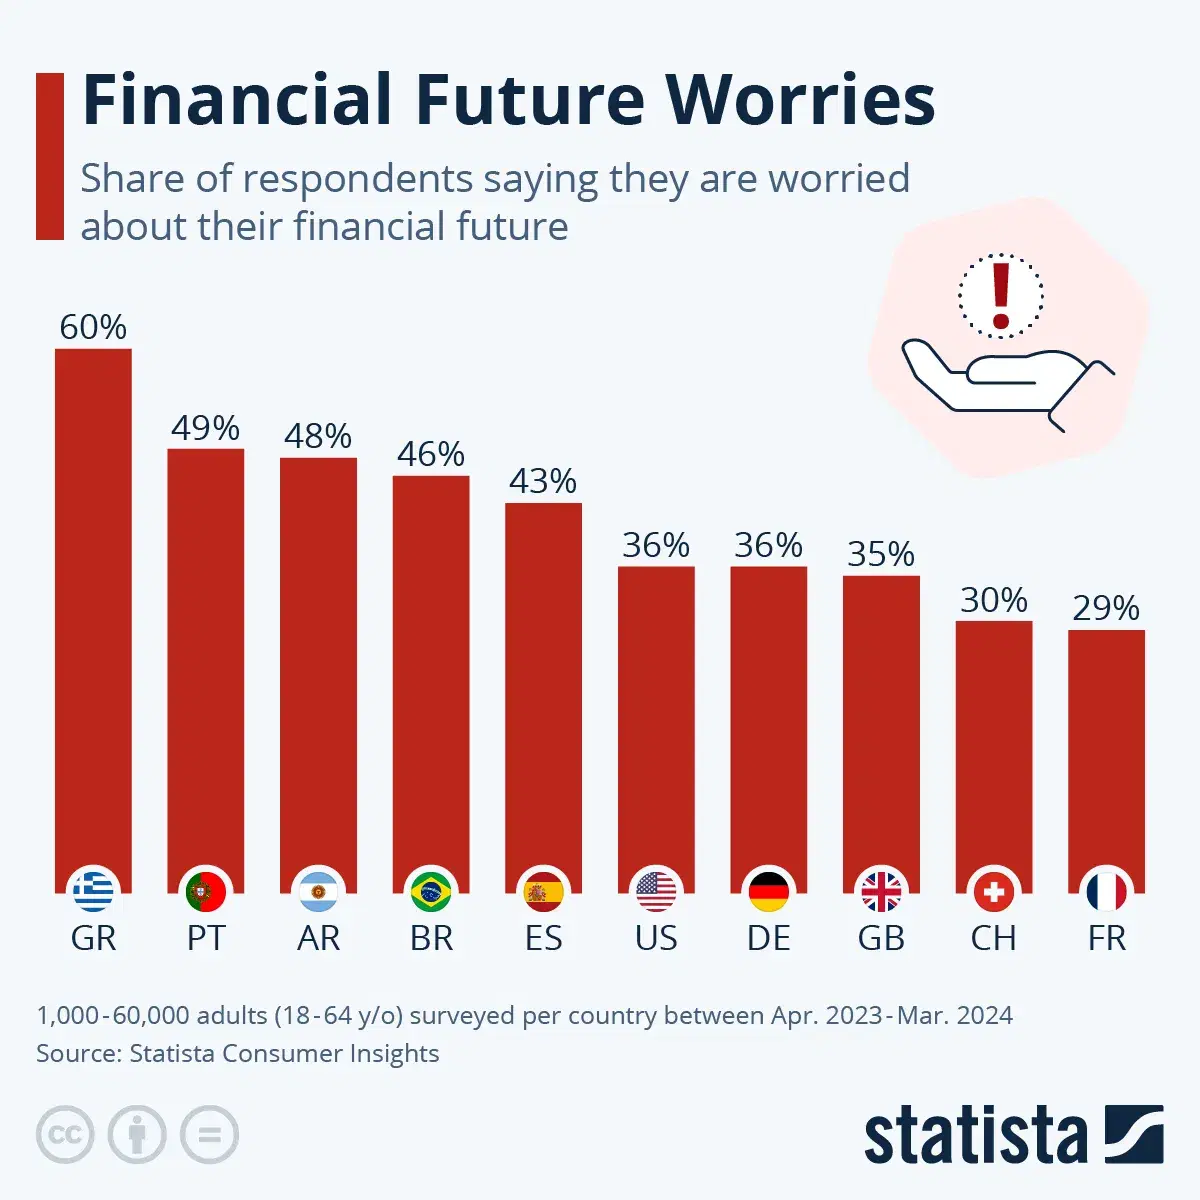 Financial Future Worries